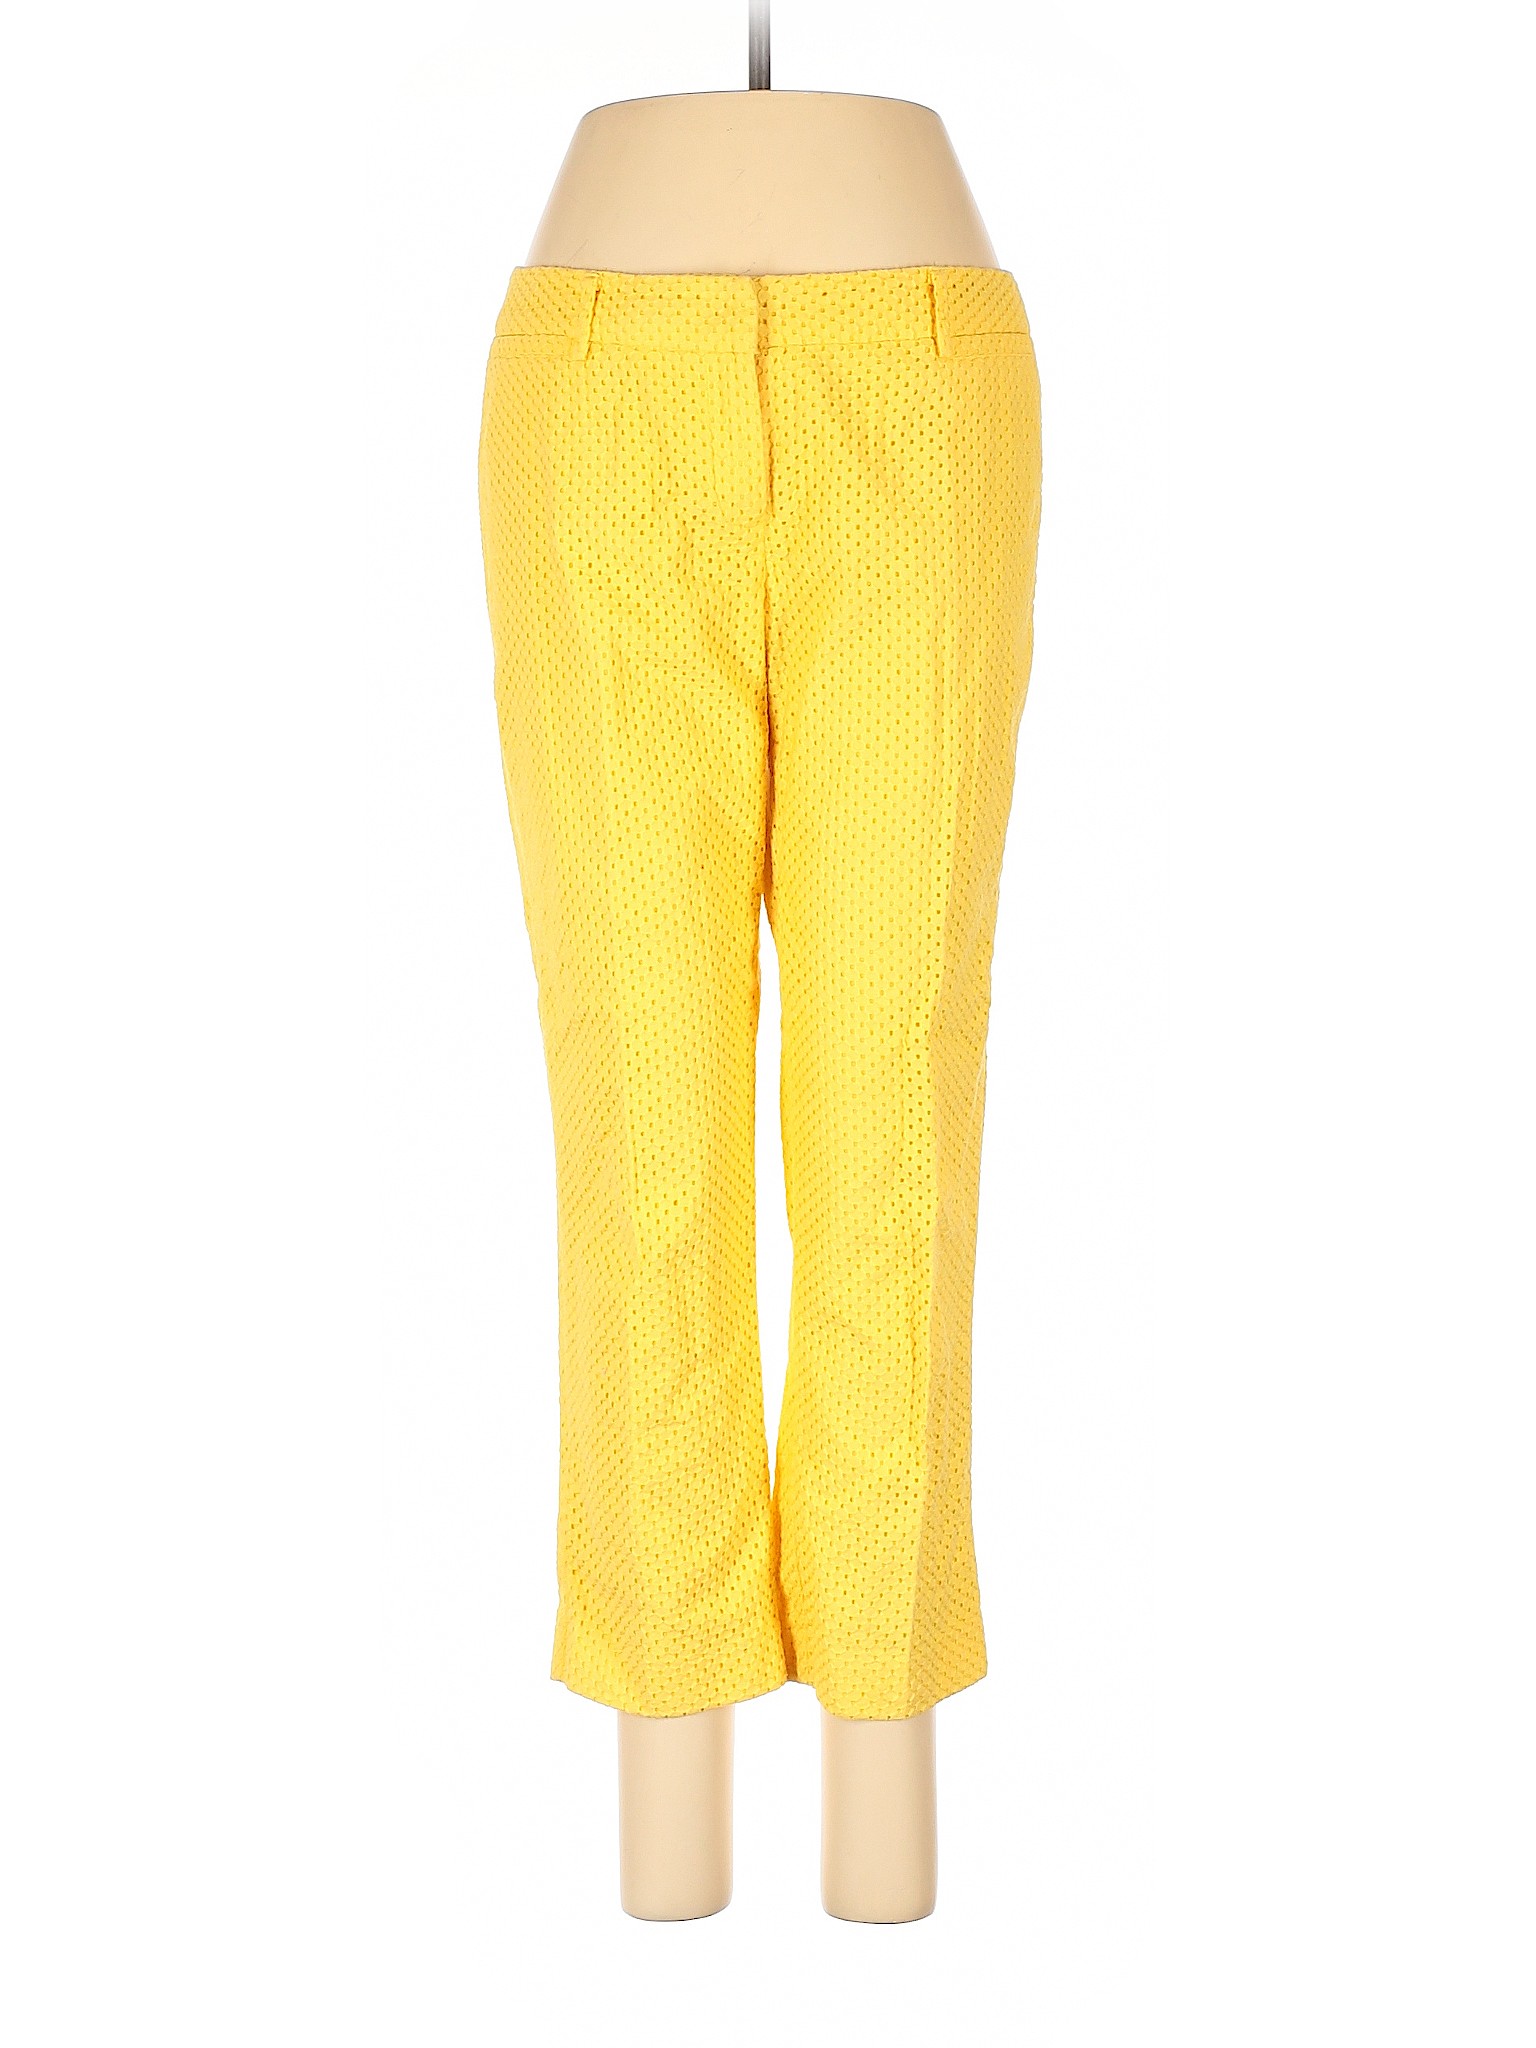 New York & Company Women Yellow Casual Pants 4 | eBay